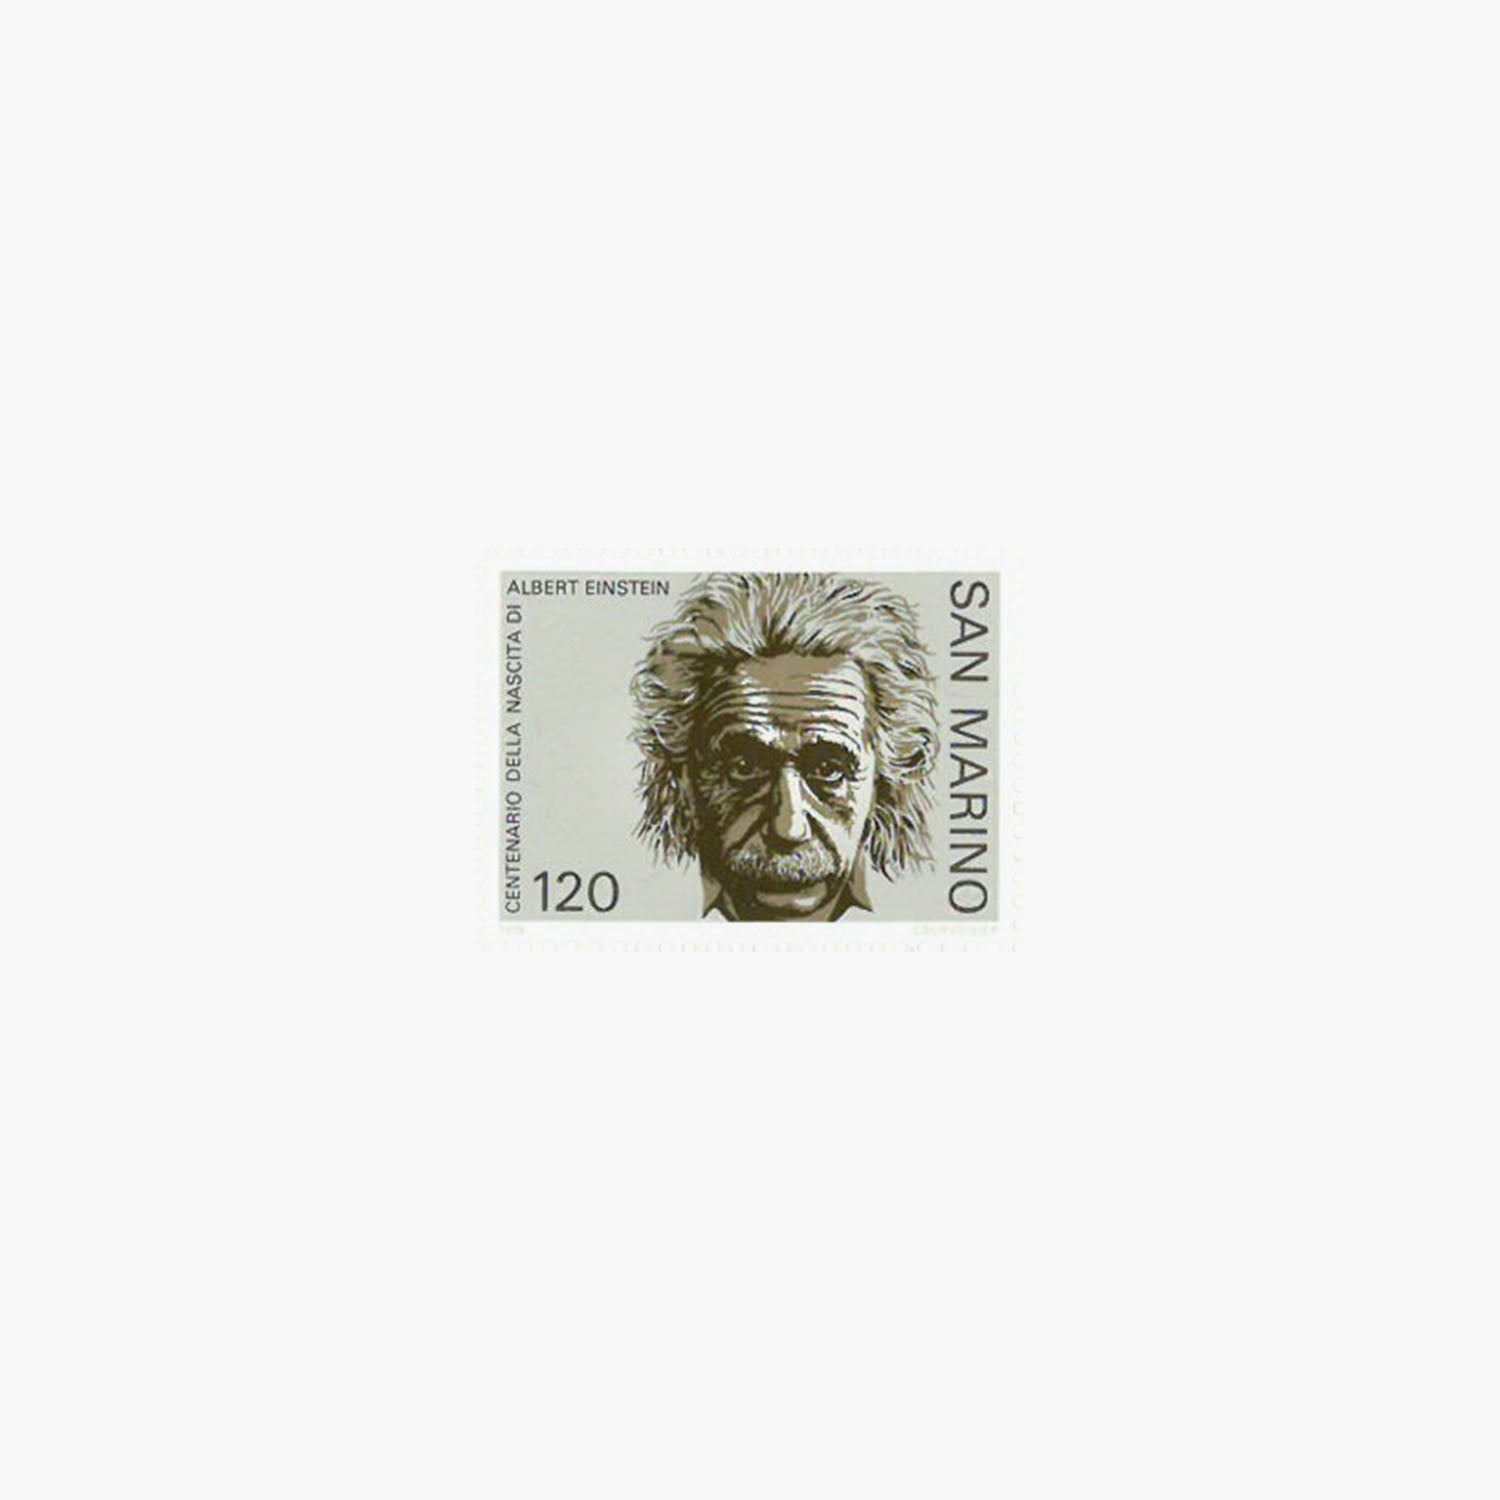 Albert Einstein coin, banknote and stamp collection